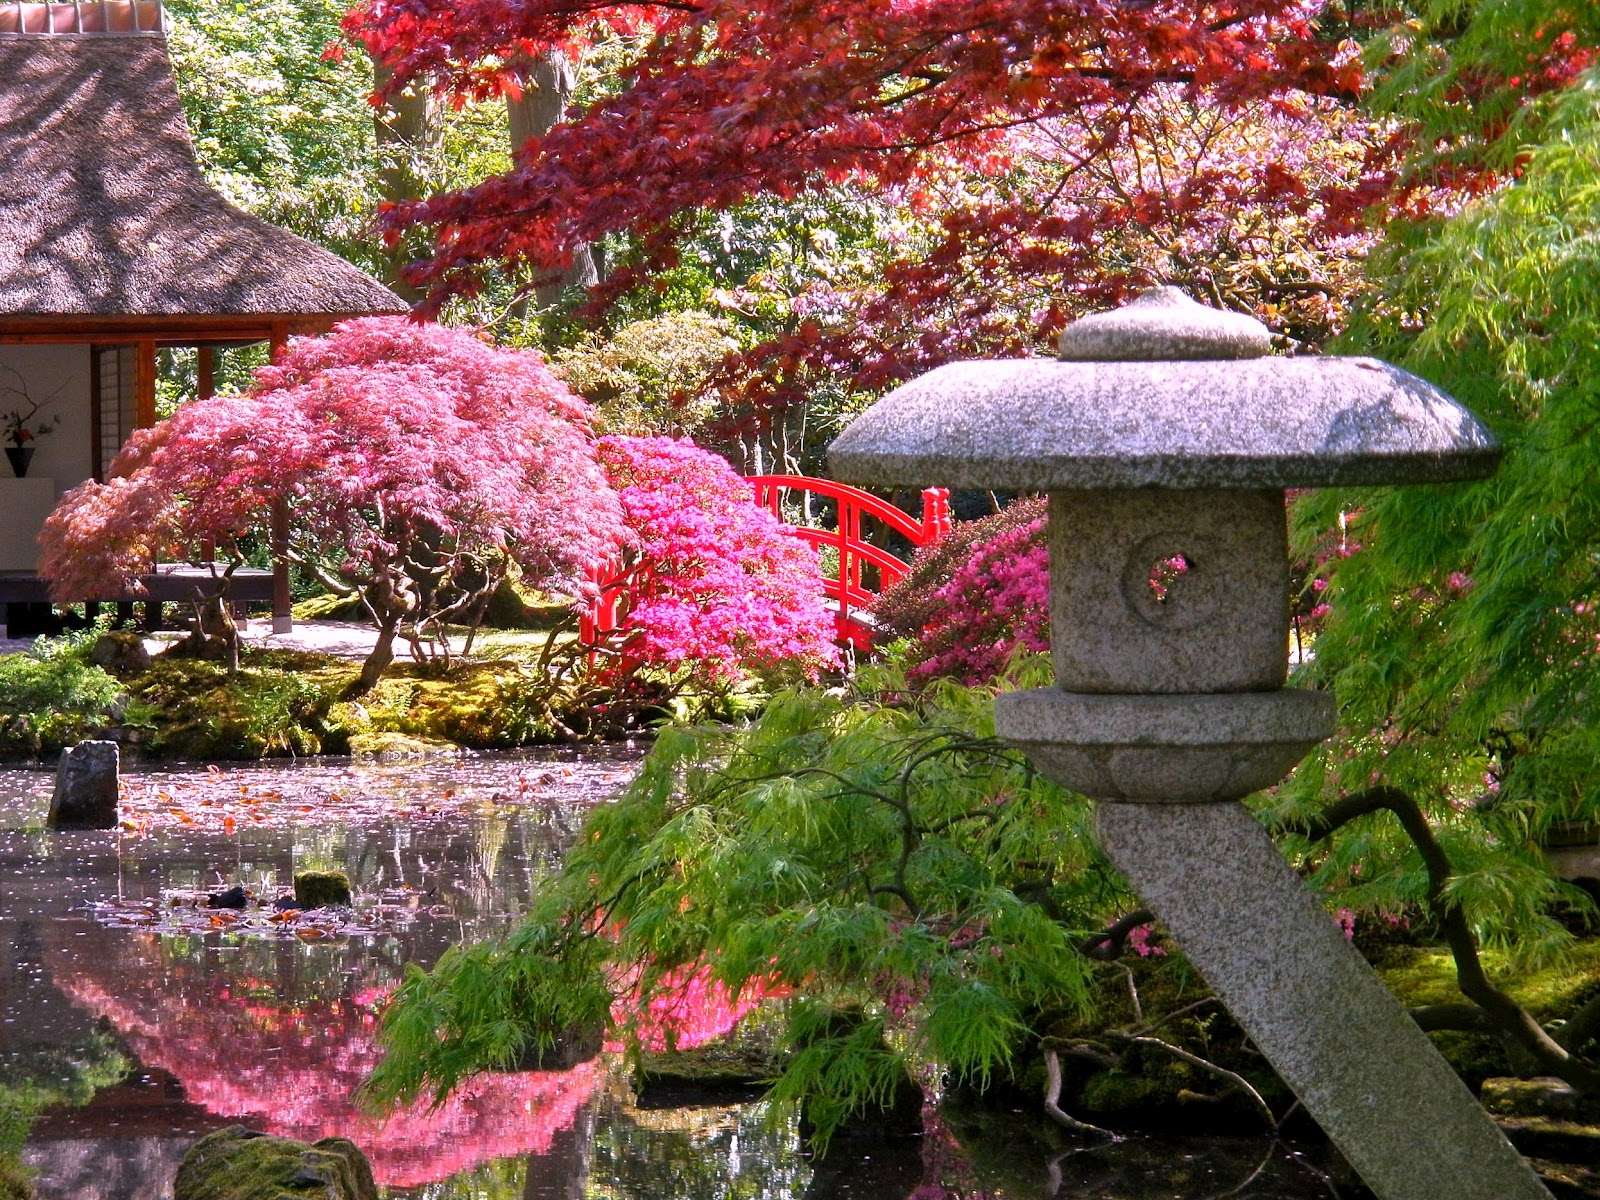 Zen Garden With Flowers puzzle online from photo